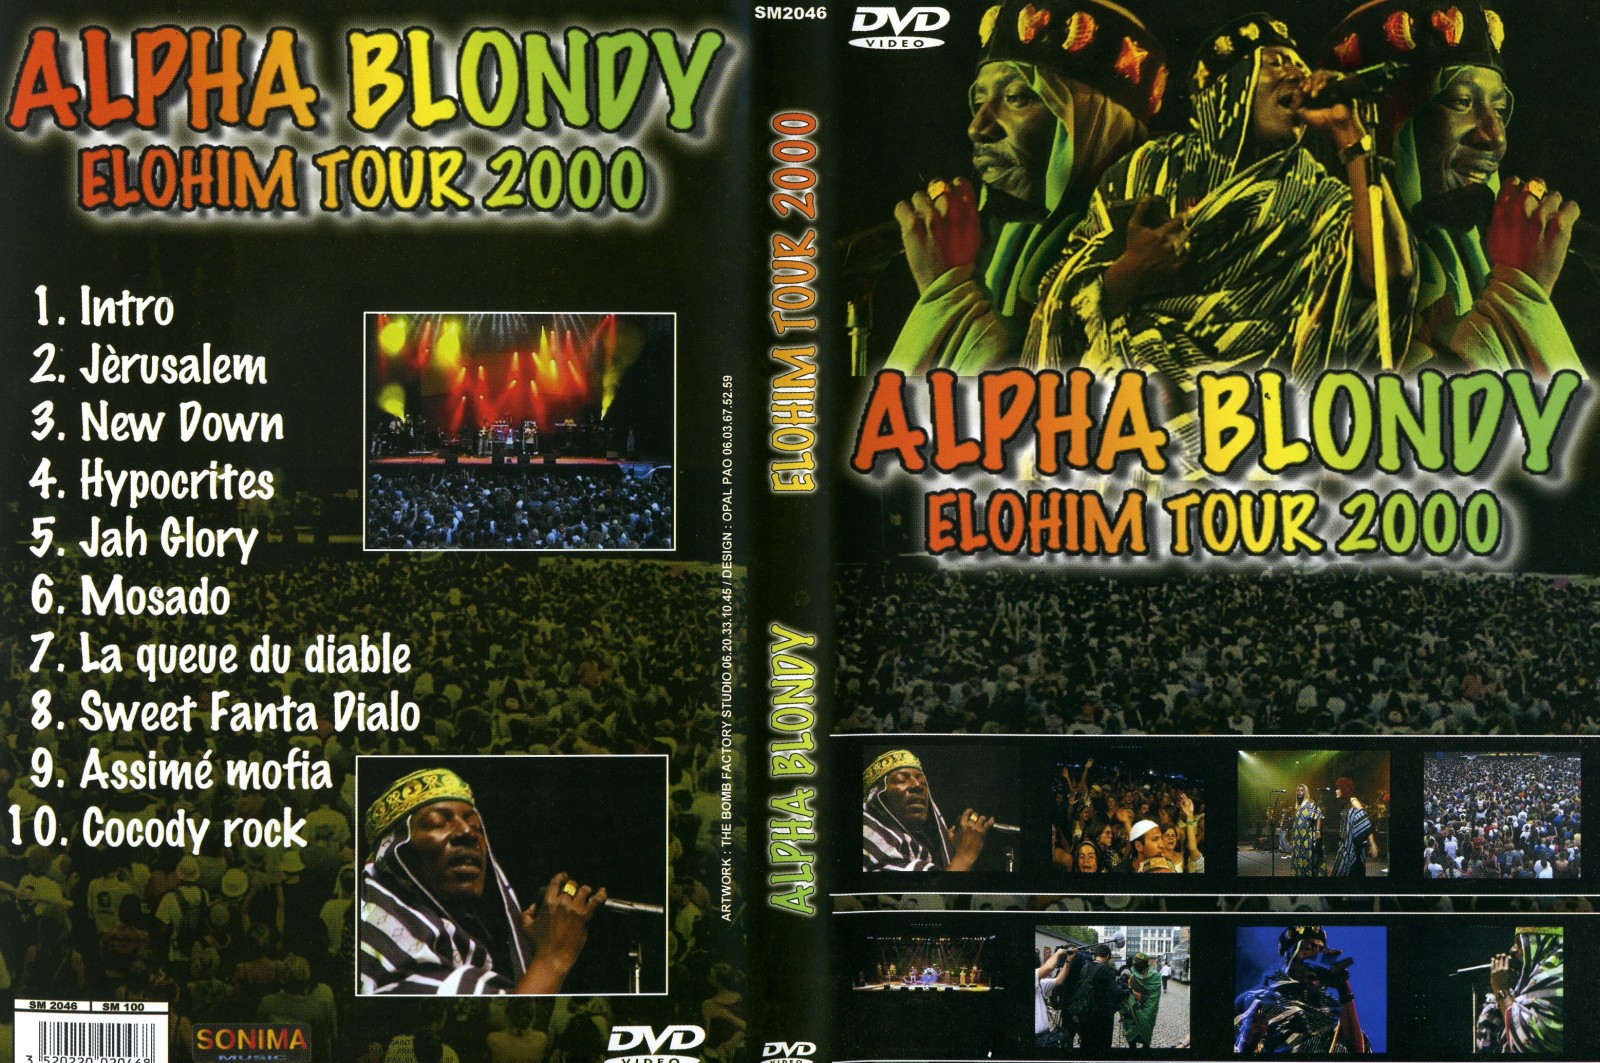 Jaquette DVD Alpha Blondy Eelohim tour 2000